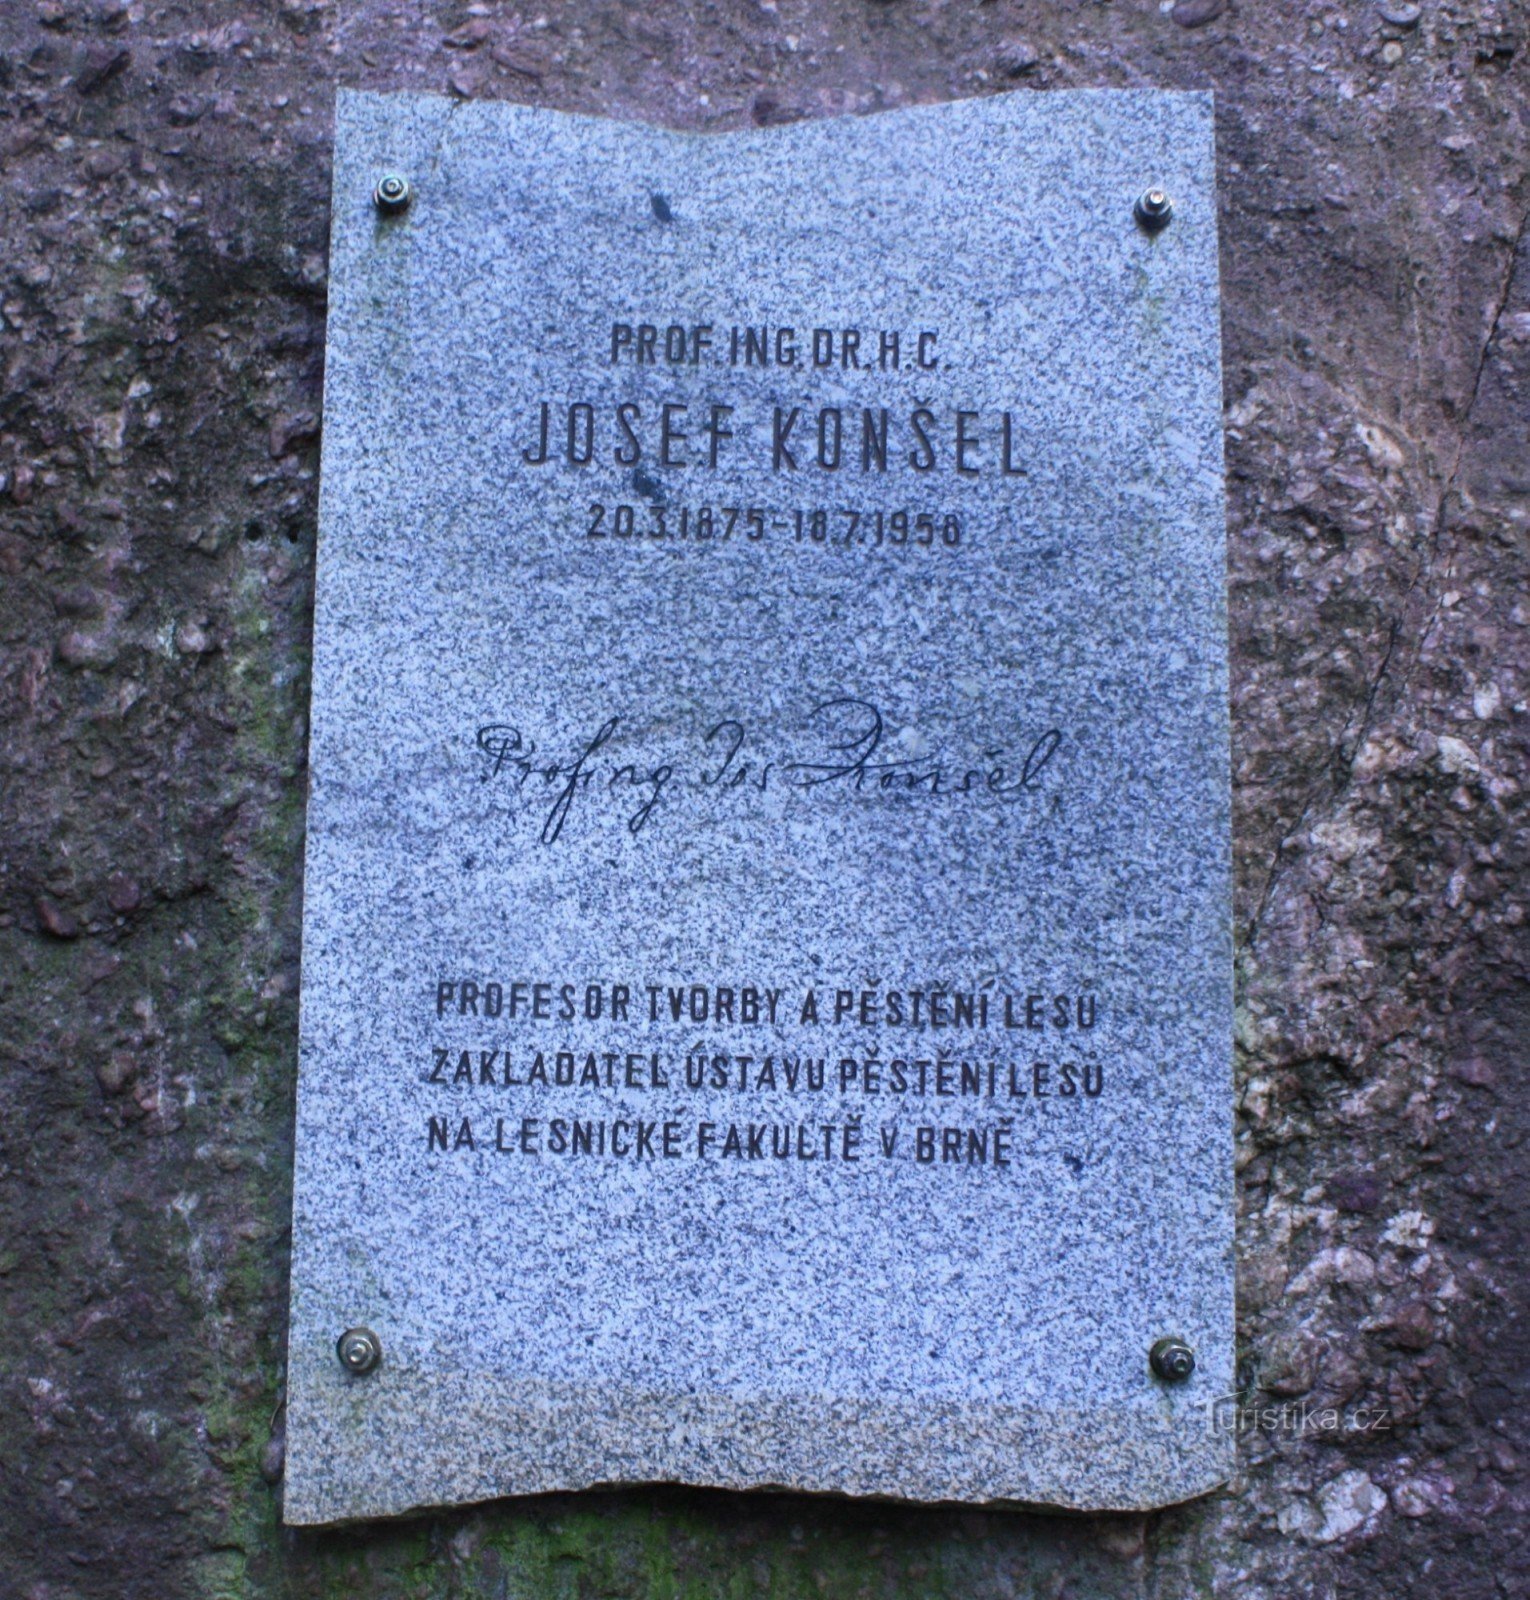 Josef Konšelin muistomerkki